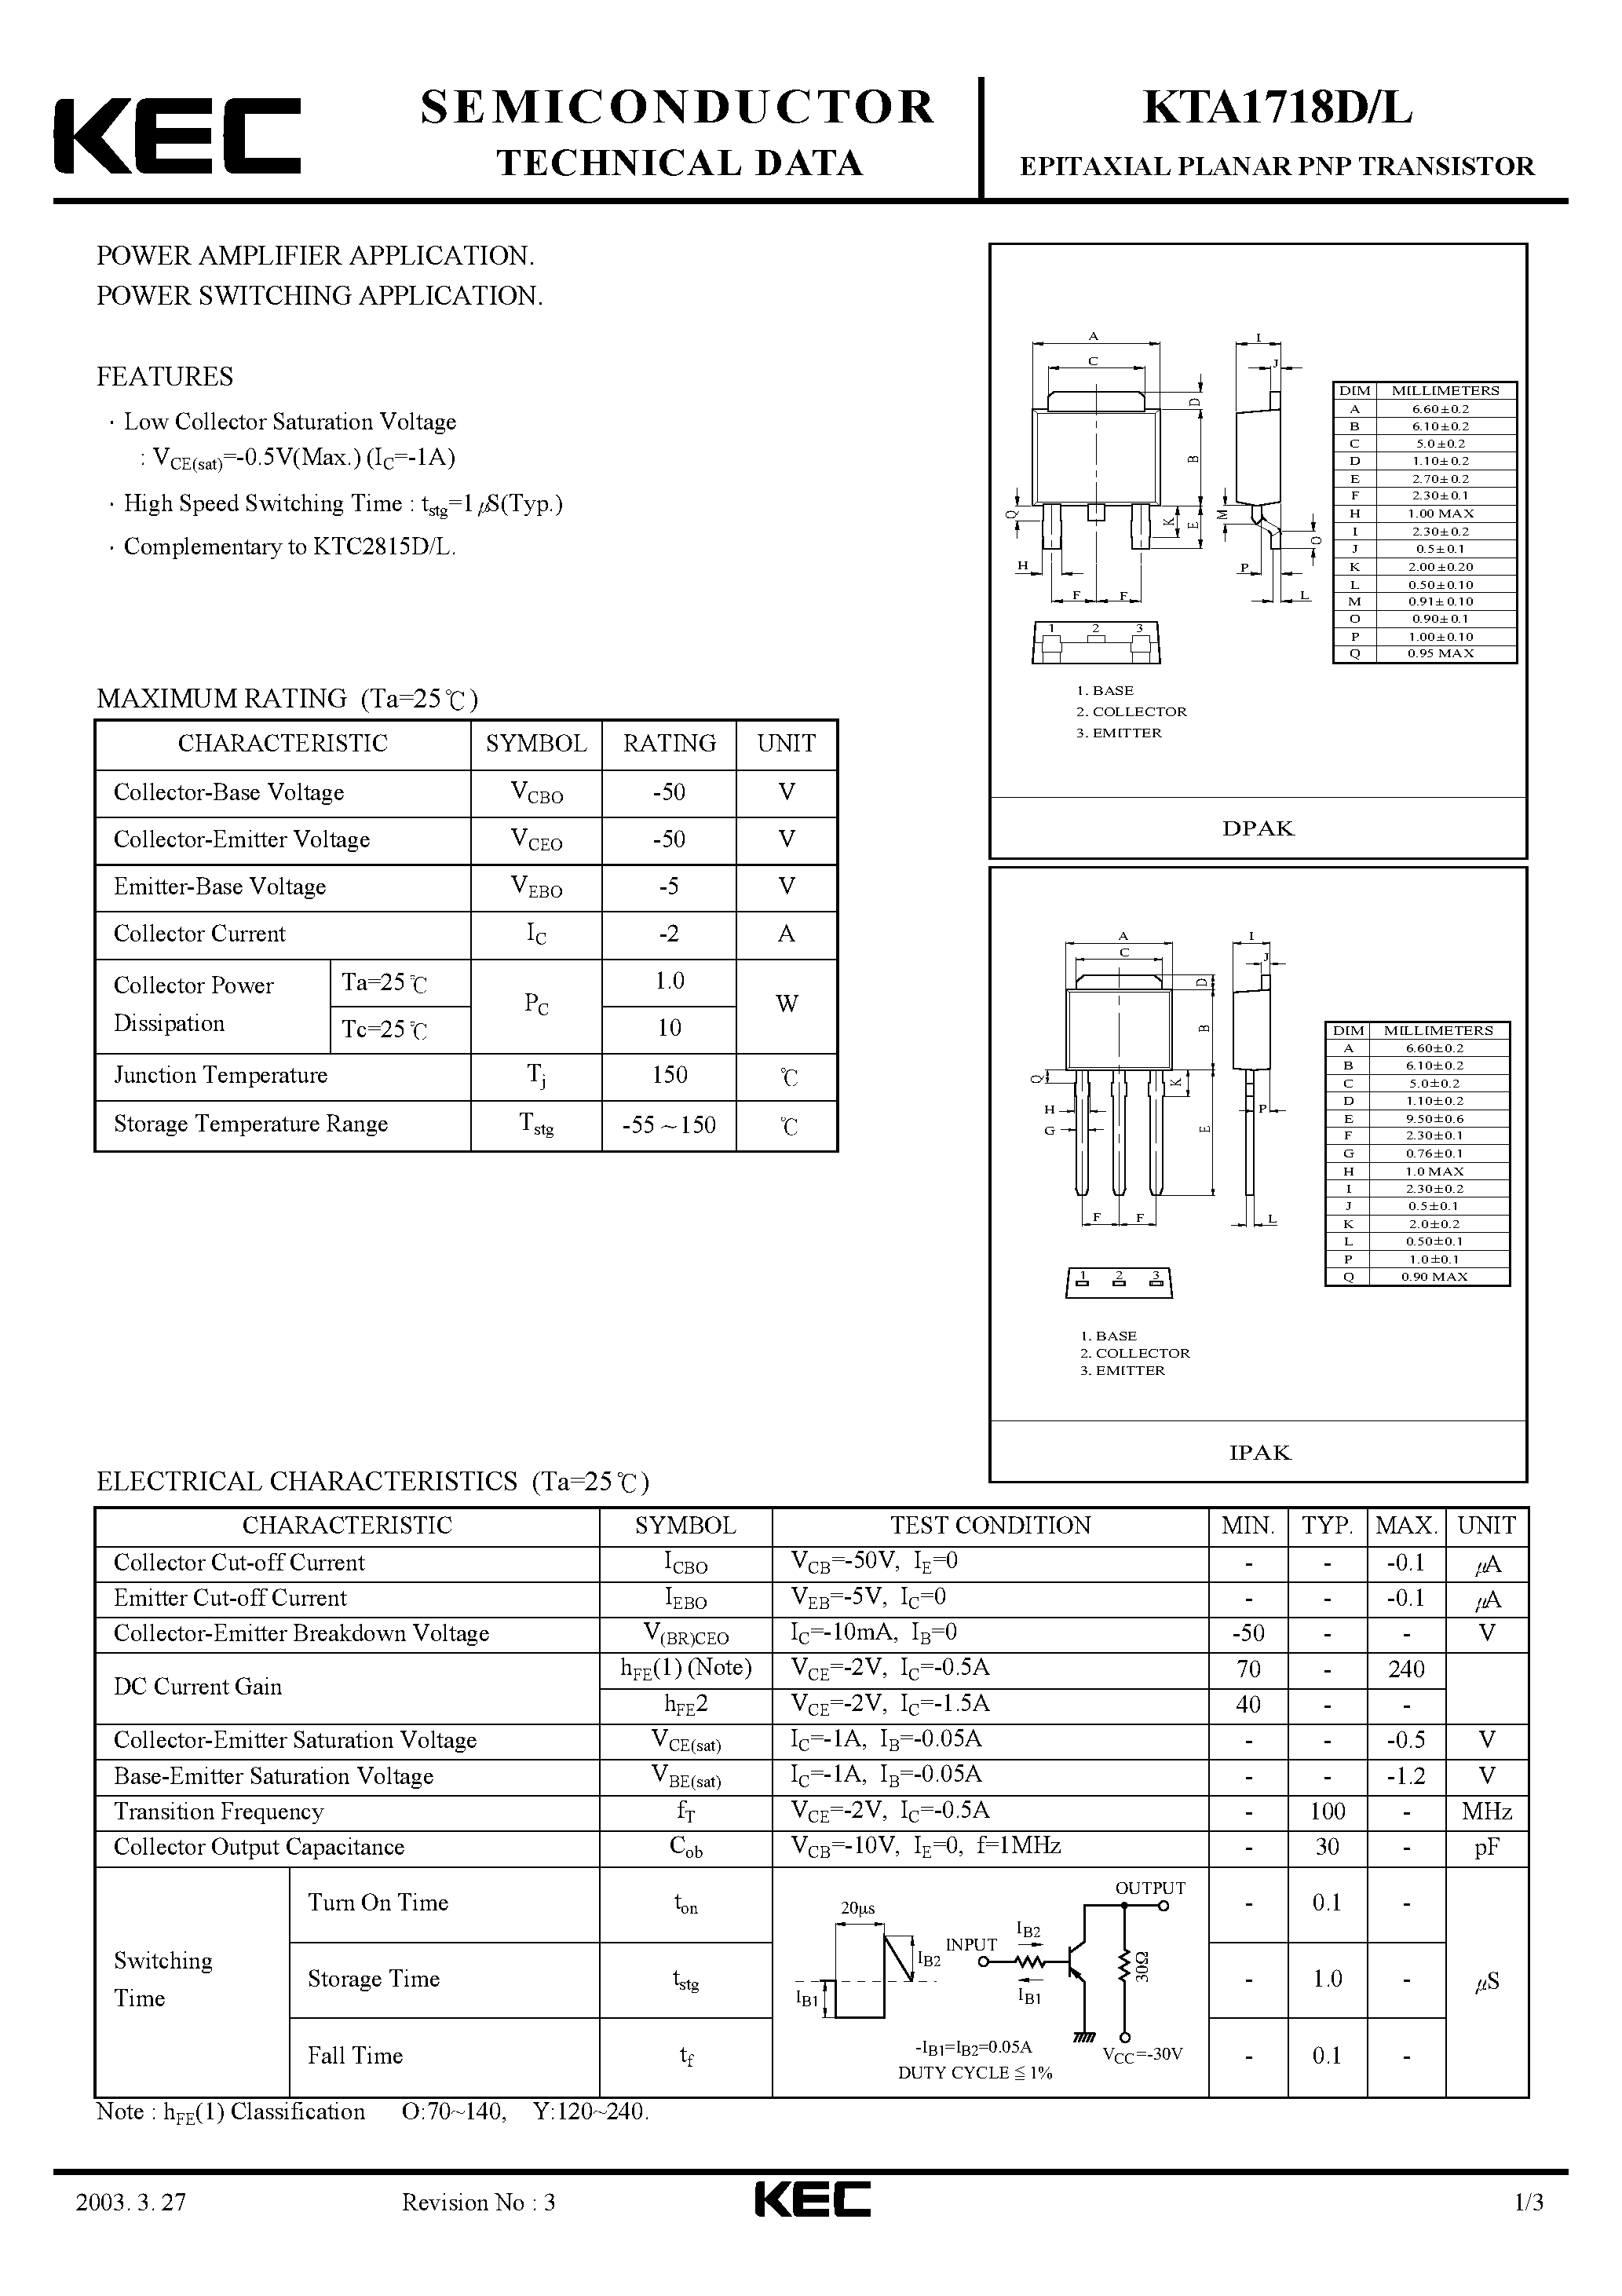 Datasheet KTA1718D - EPITAXIAL PLANAR PNP TRANSISTOR (POWER AMPLIFIER/ POWER SWITCHING) page 1